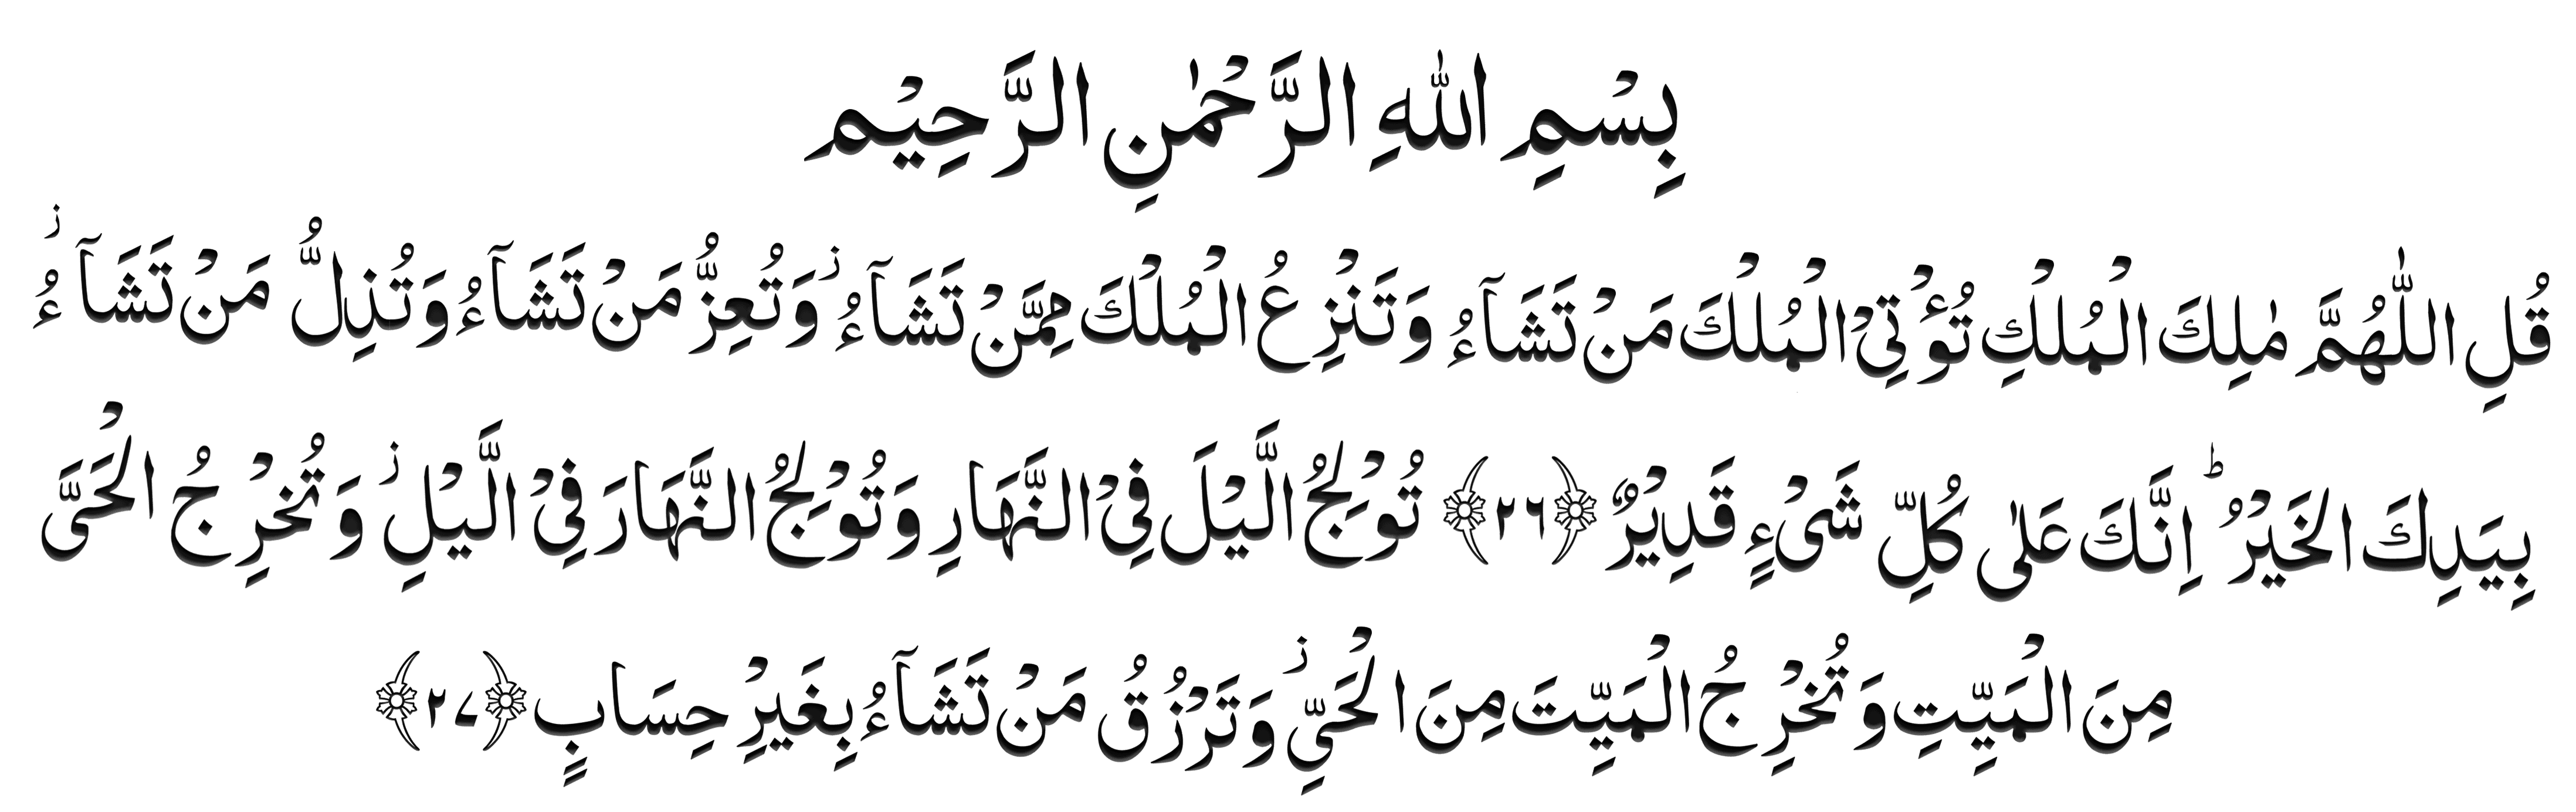 surah-al-Imran-ayat-26-27